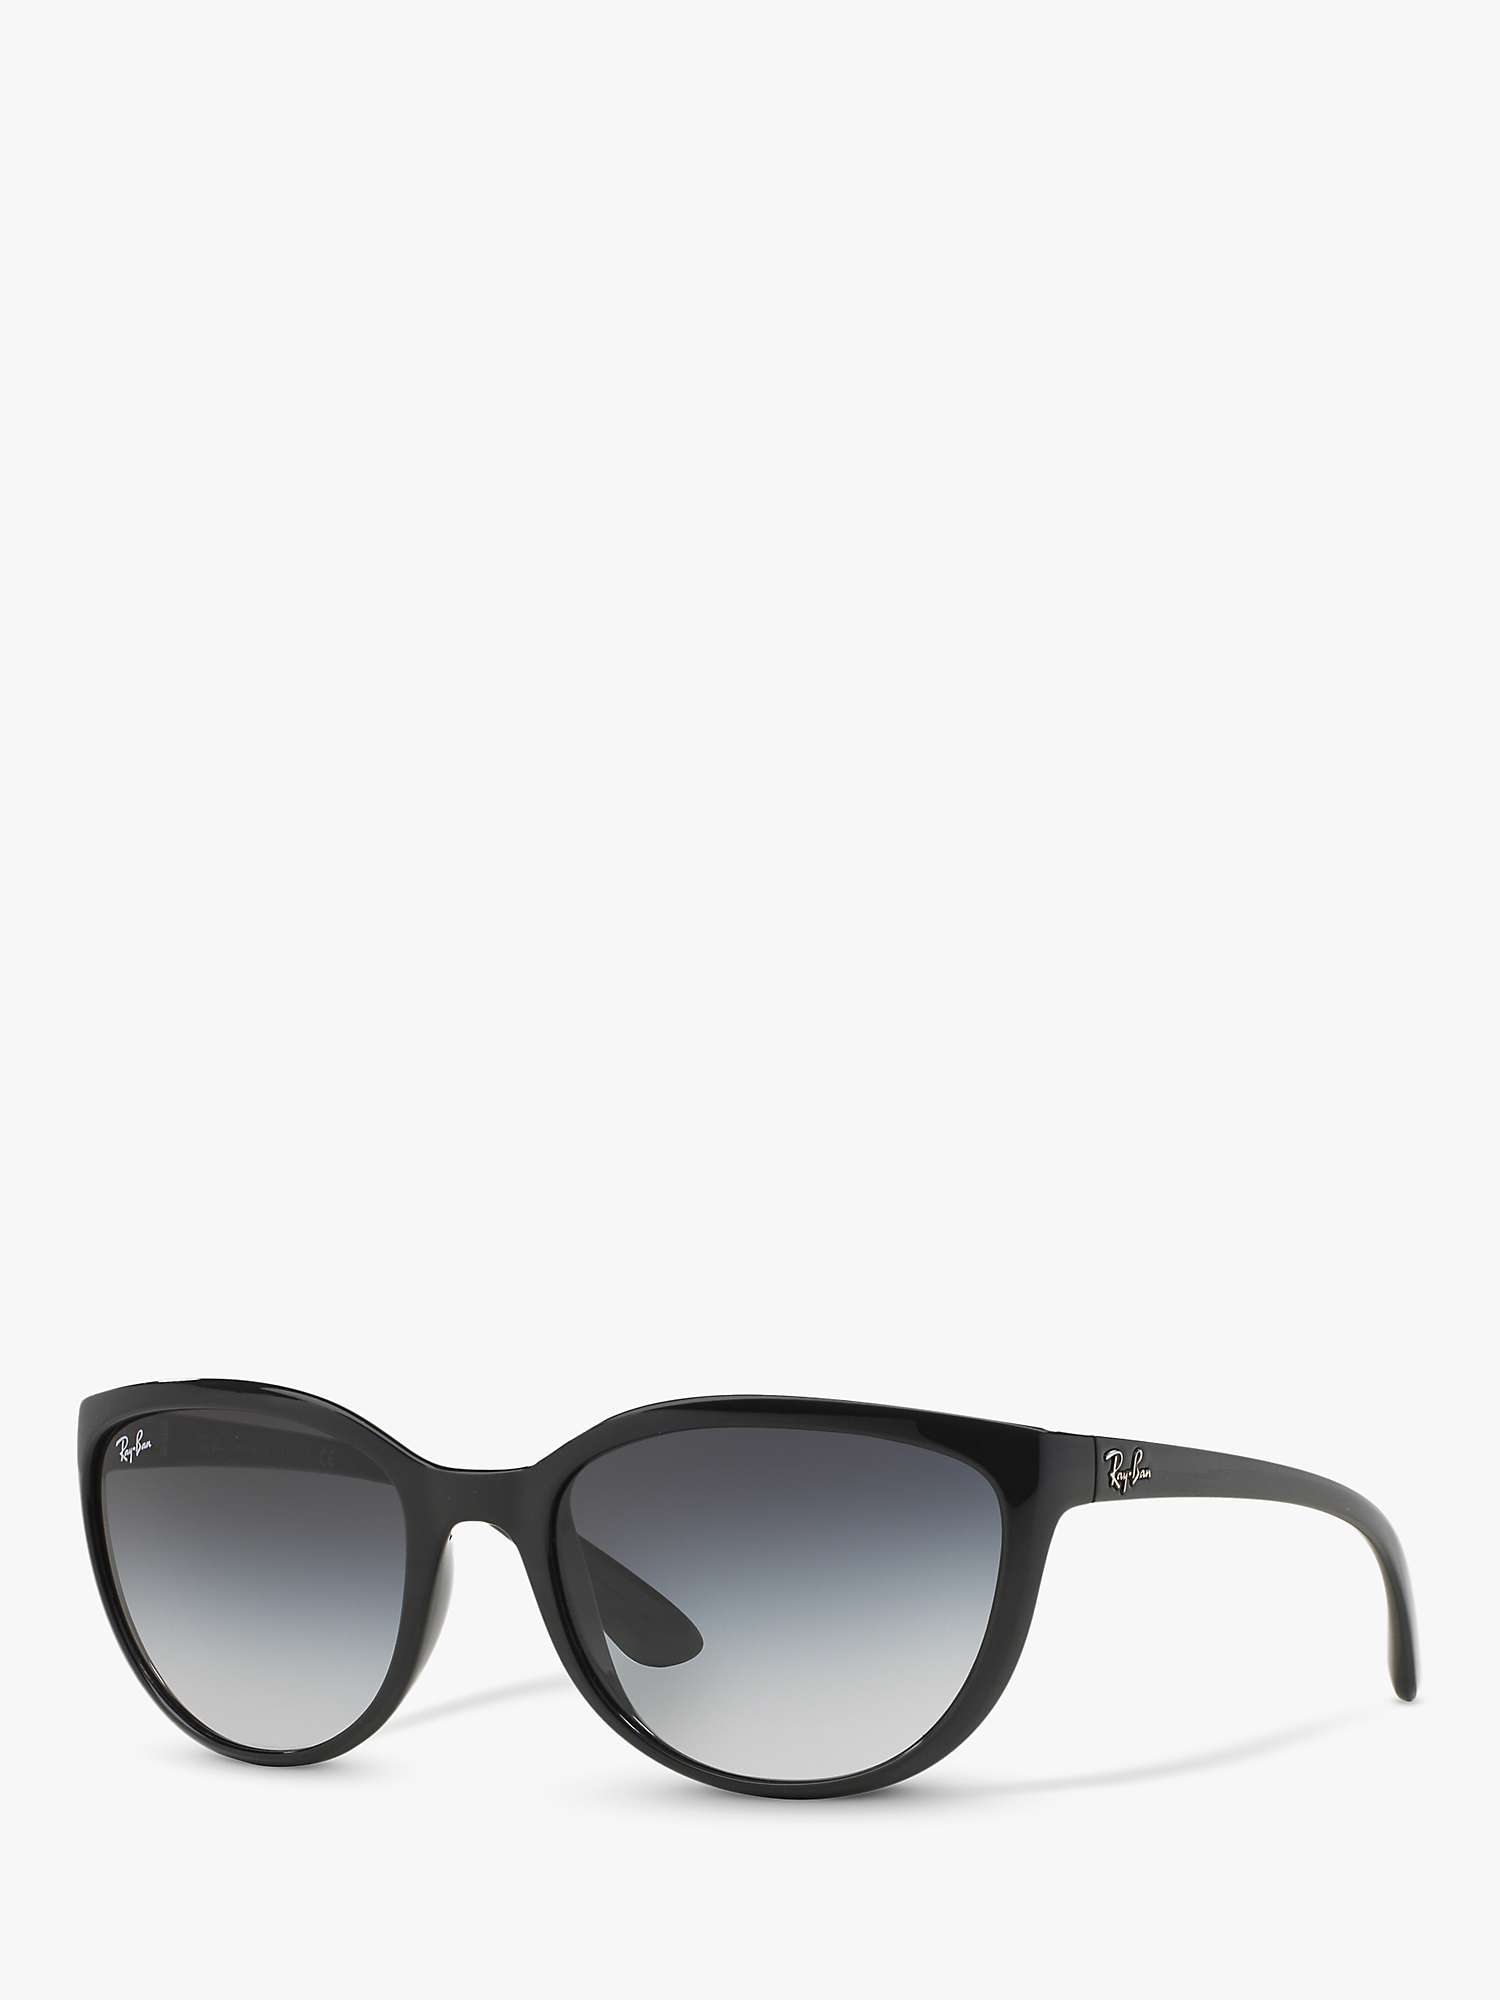 Roest omzeilen Adolescent Ray-Ban RB4167 59 Women's Emma Irregular Sunglasses, Black/Grey at John  Lewis & Partners